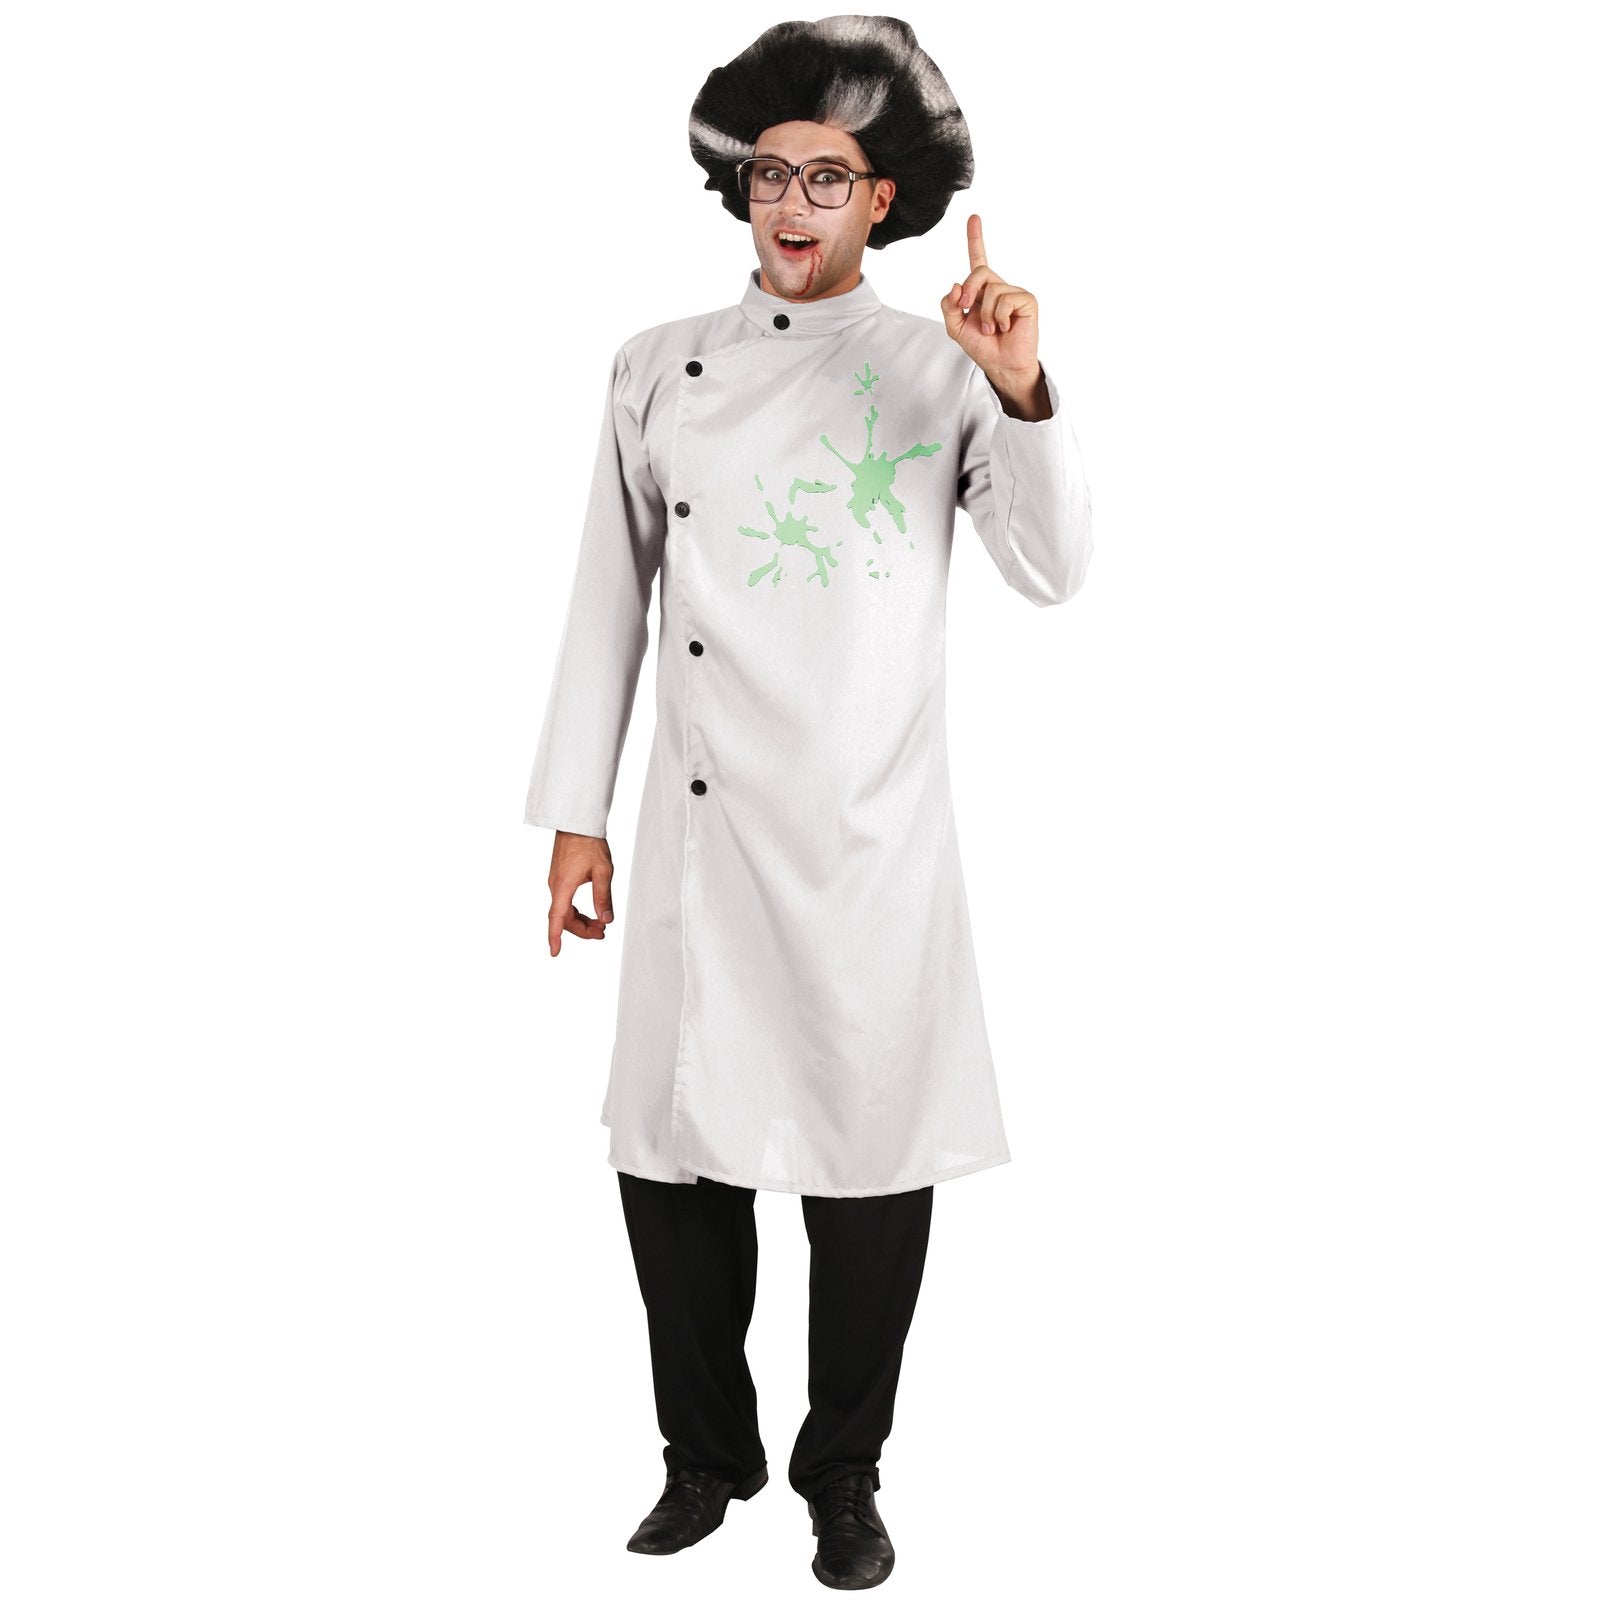 Costume Adult Weird Scientist Professor Large